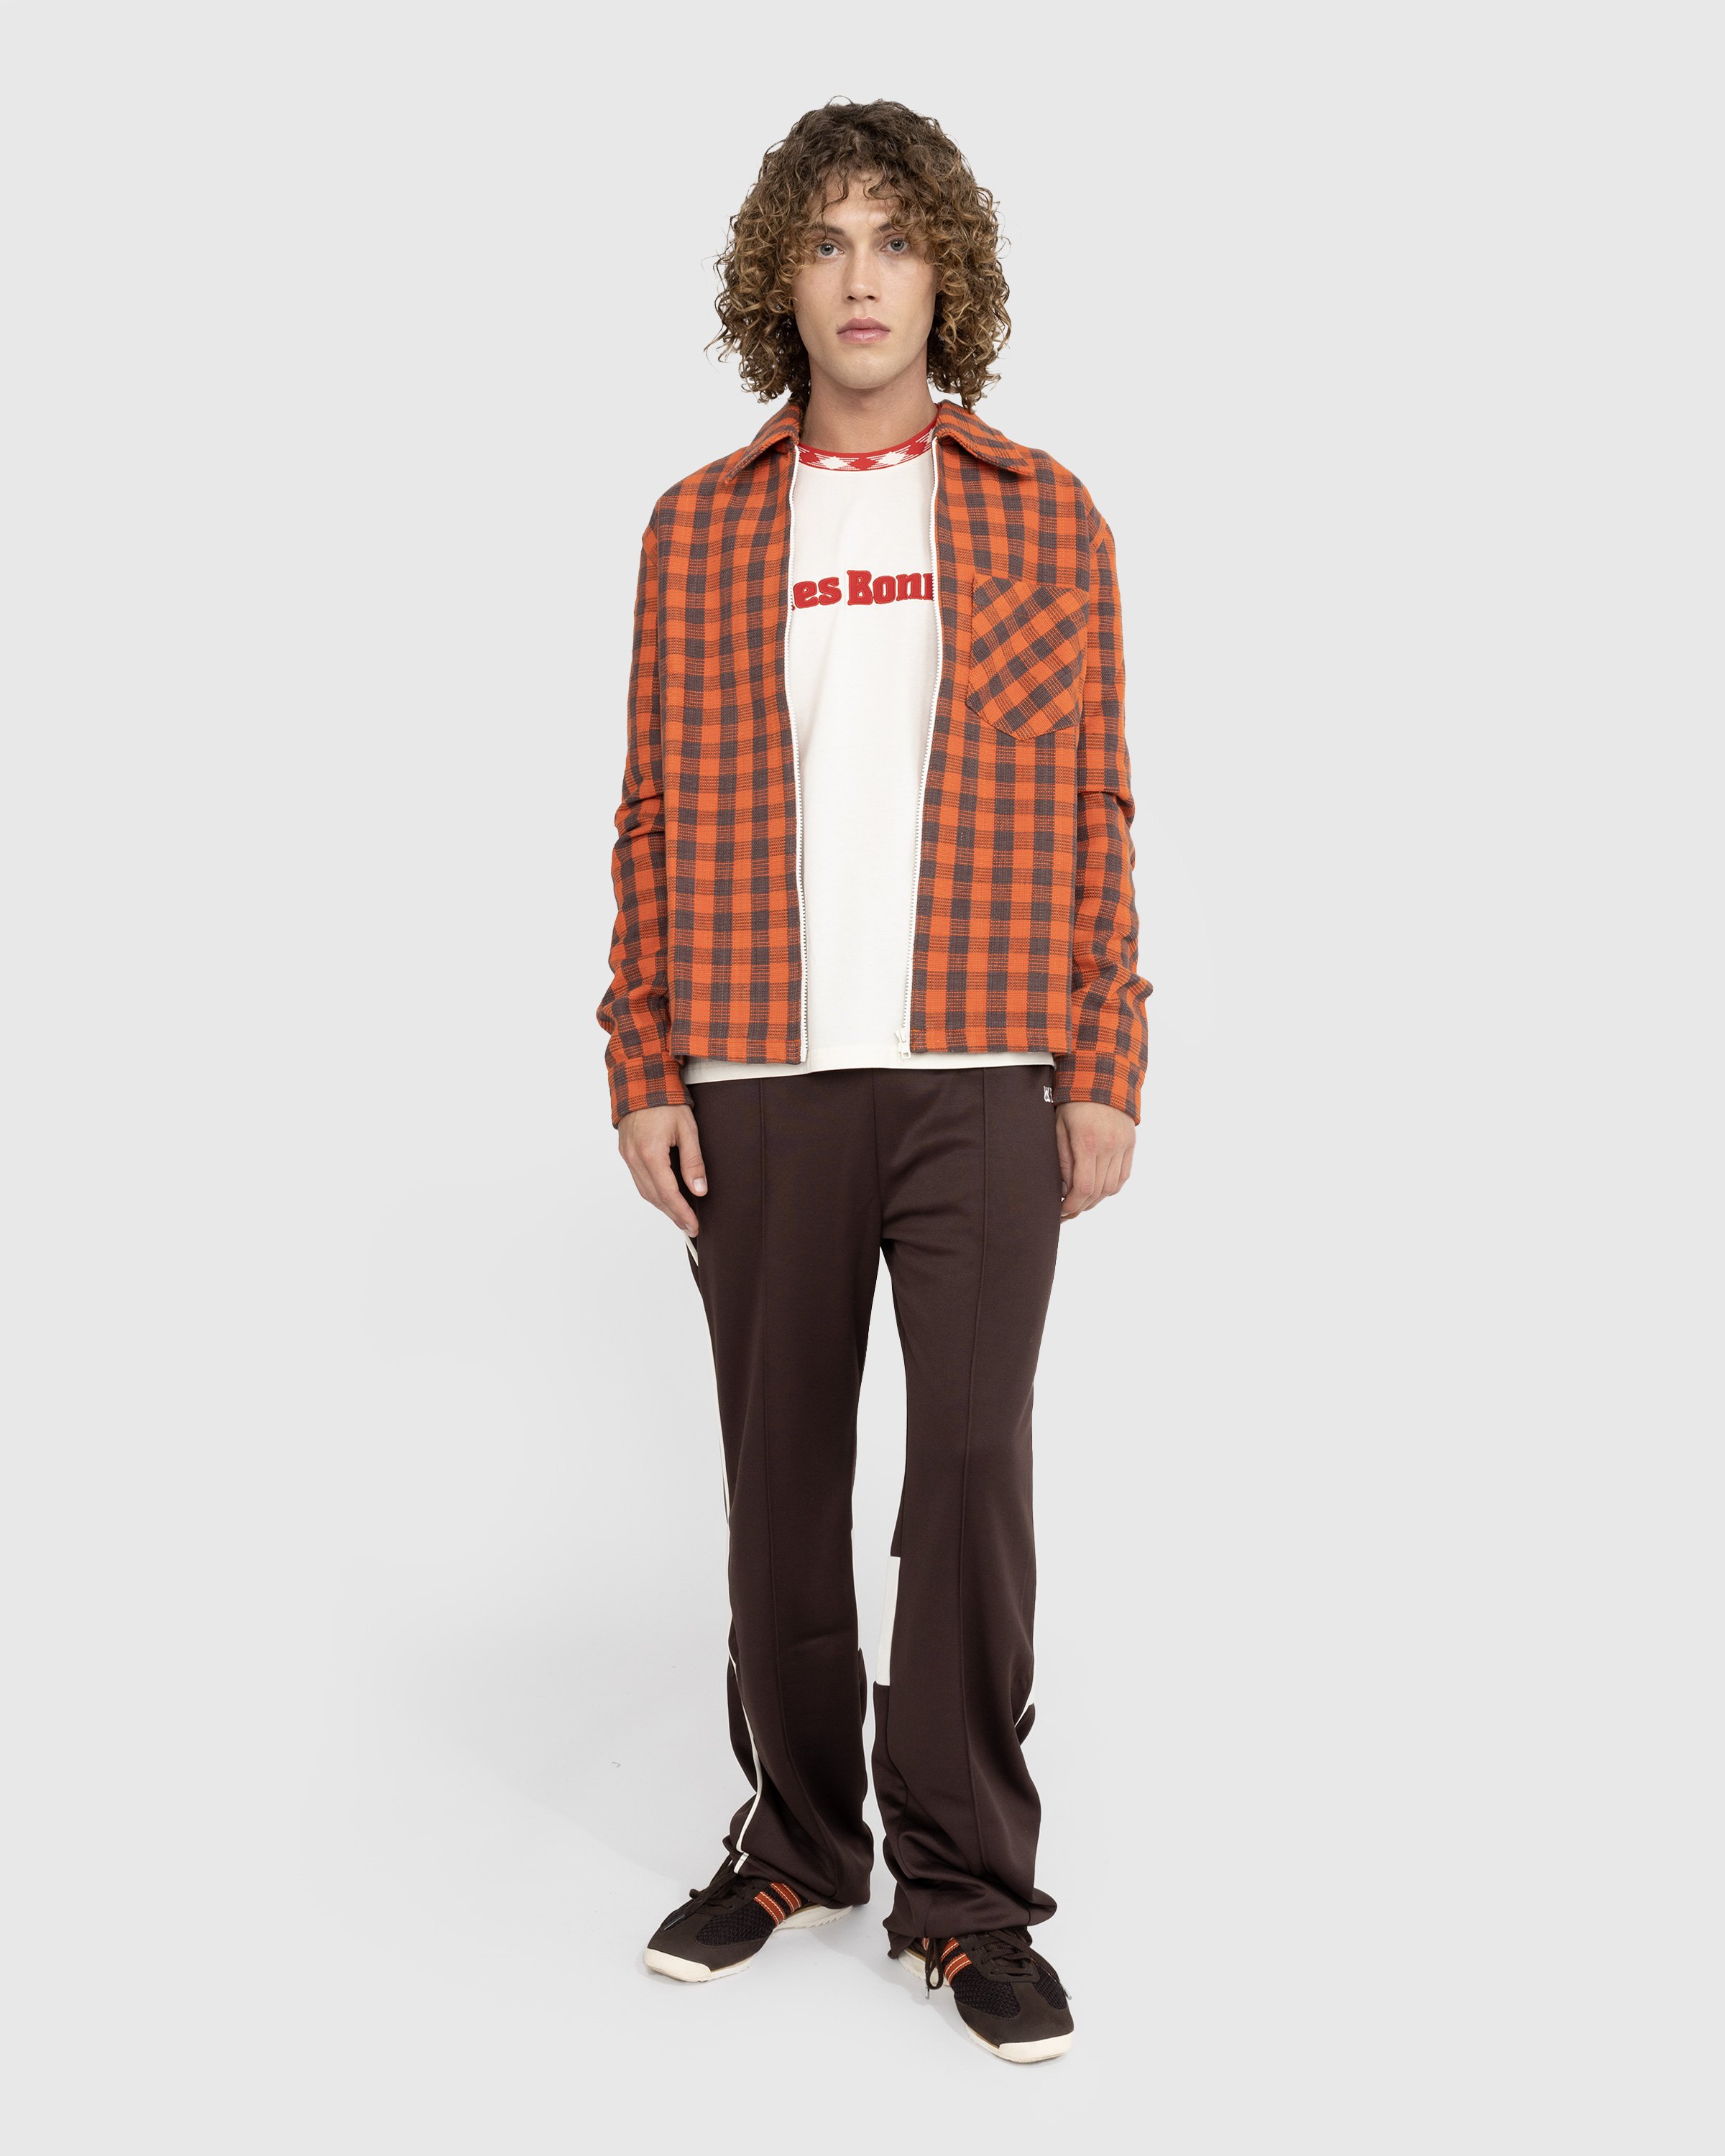 Wales Bonner - Études Jacket Cotton Check Orange/Brown - Clothing - Orange - Image 3